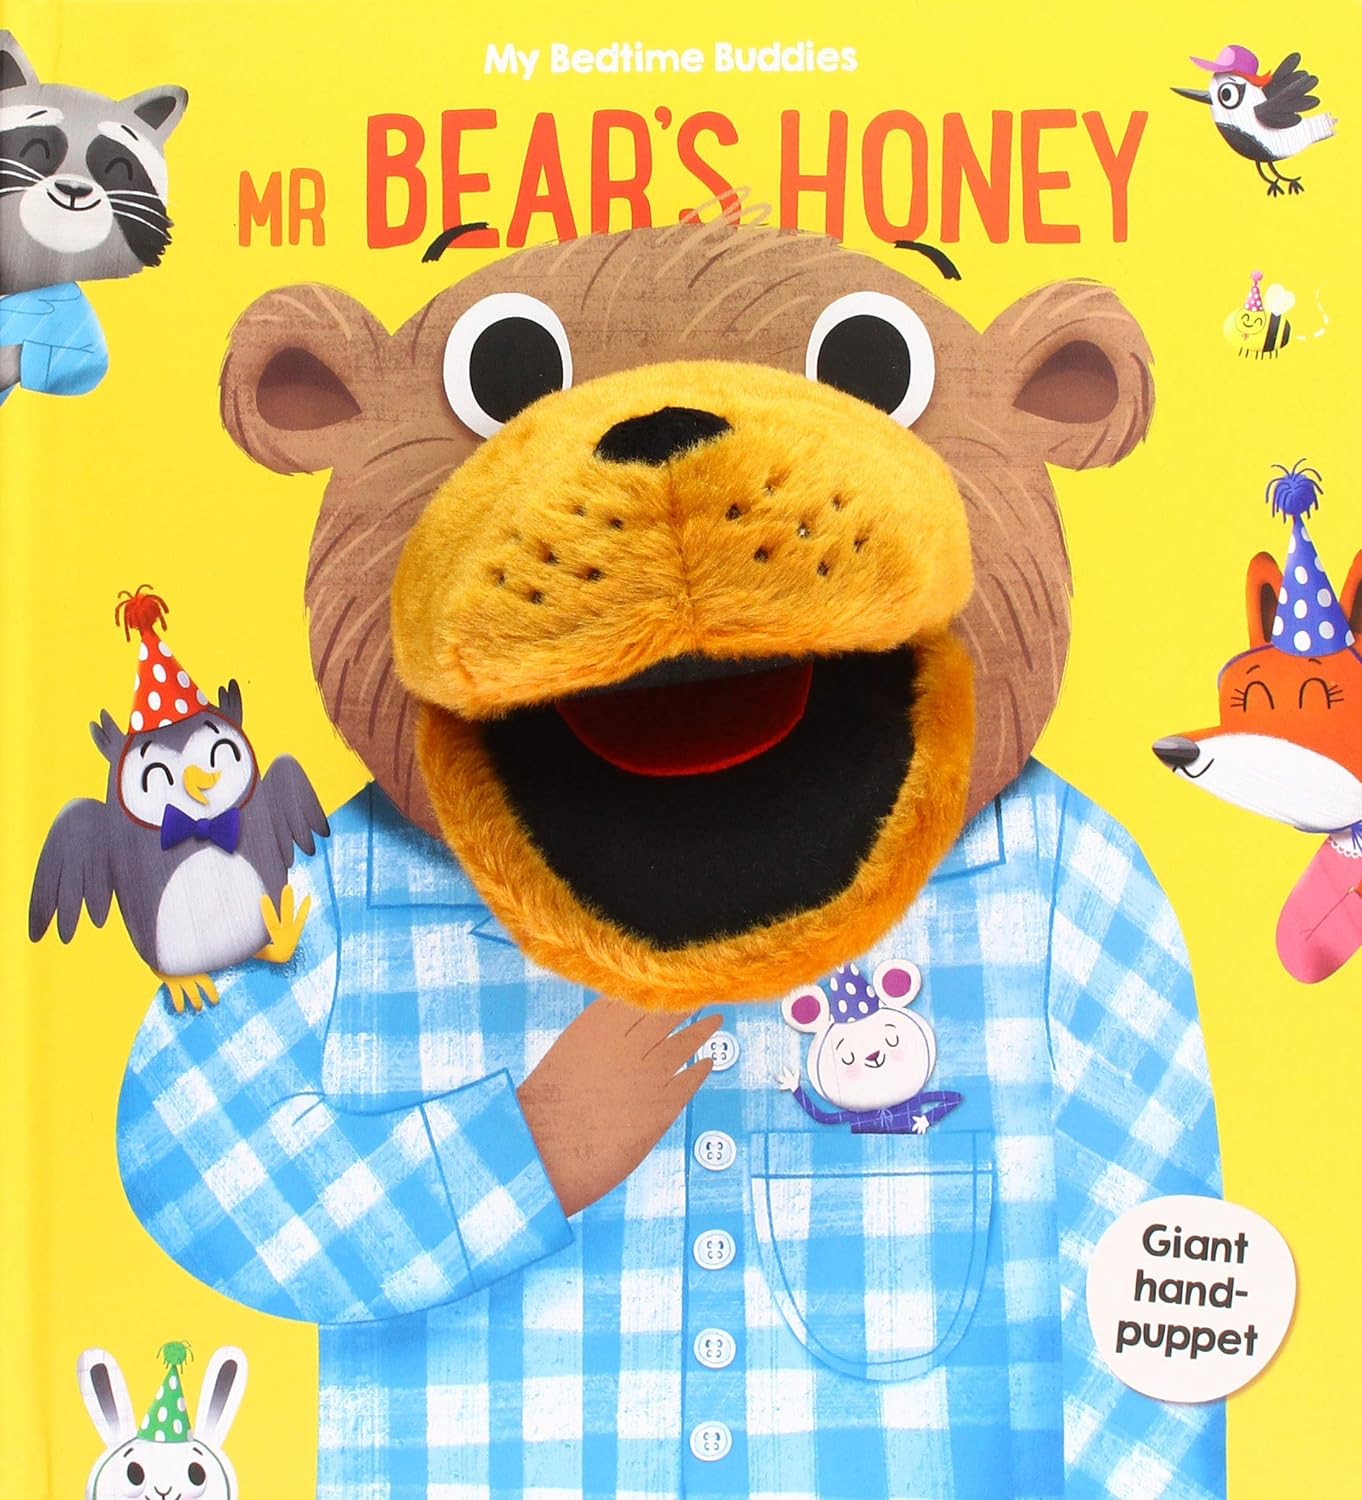 My Bedtime Buddies: Mr. Bear's Honey - Board Book